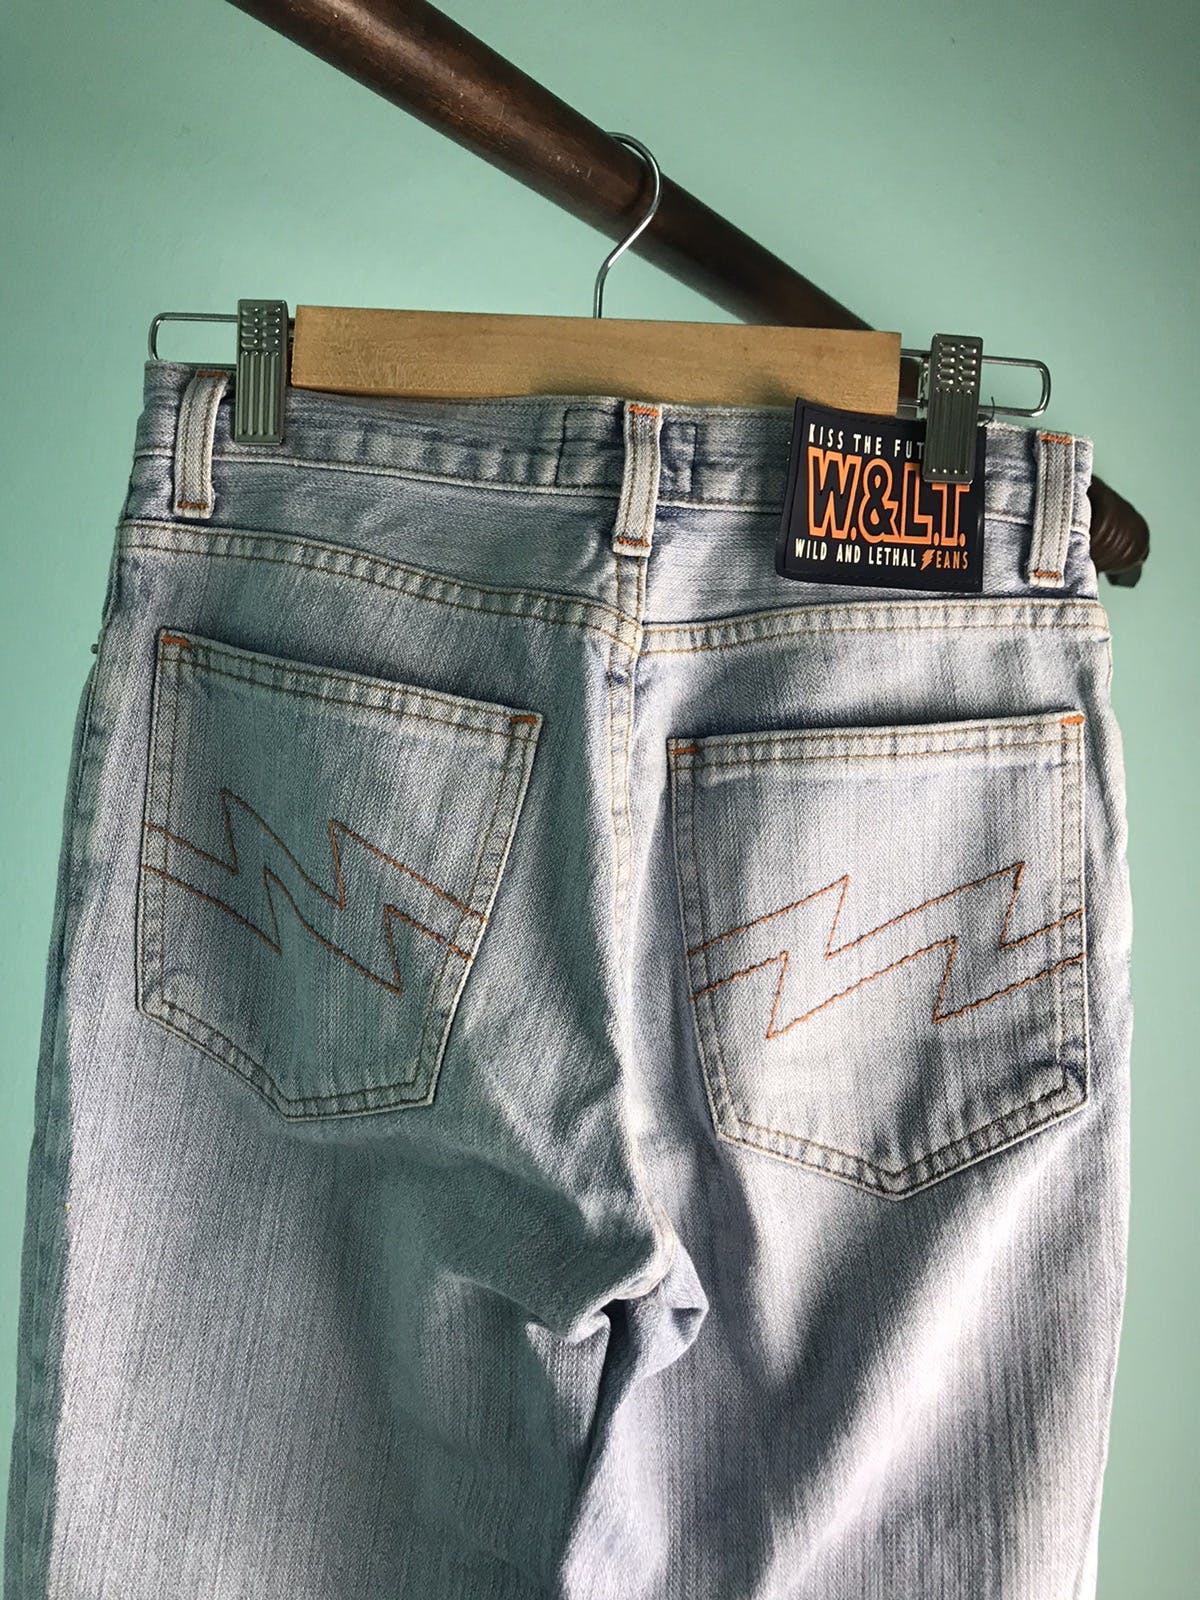 Vintage W&lt Denim Jeans - 1